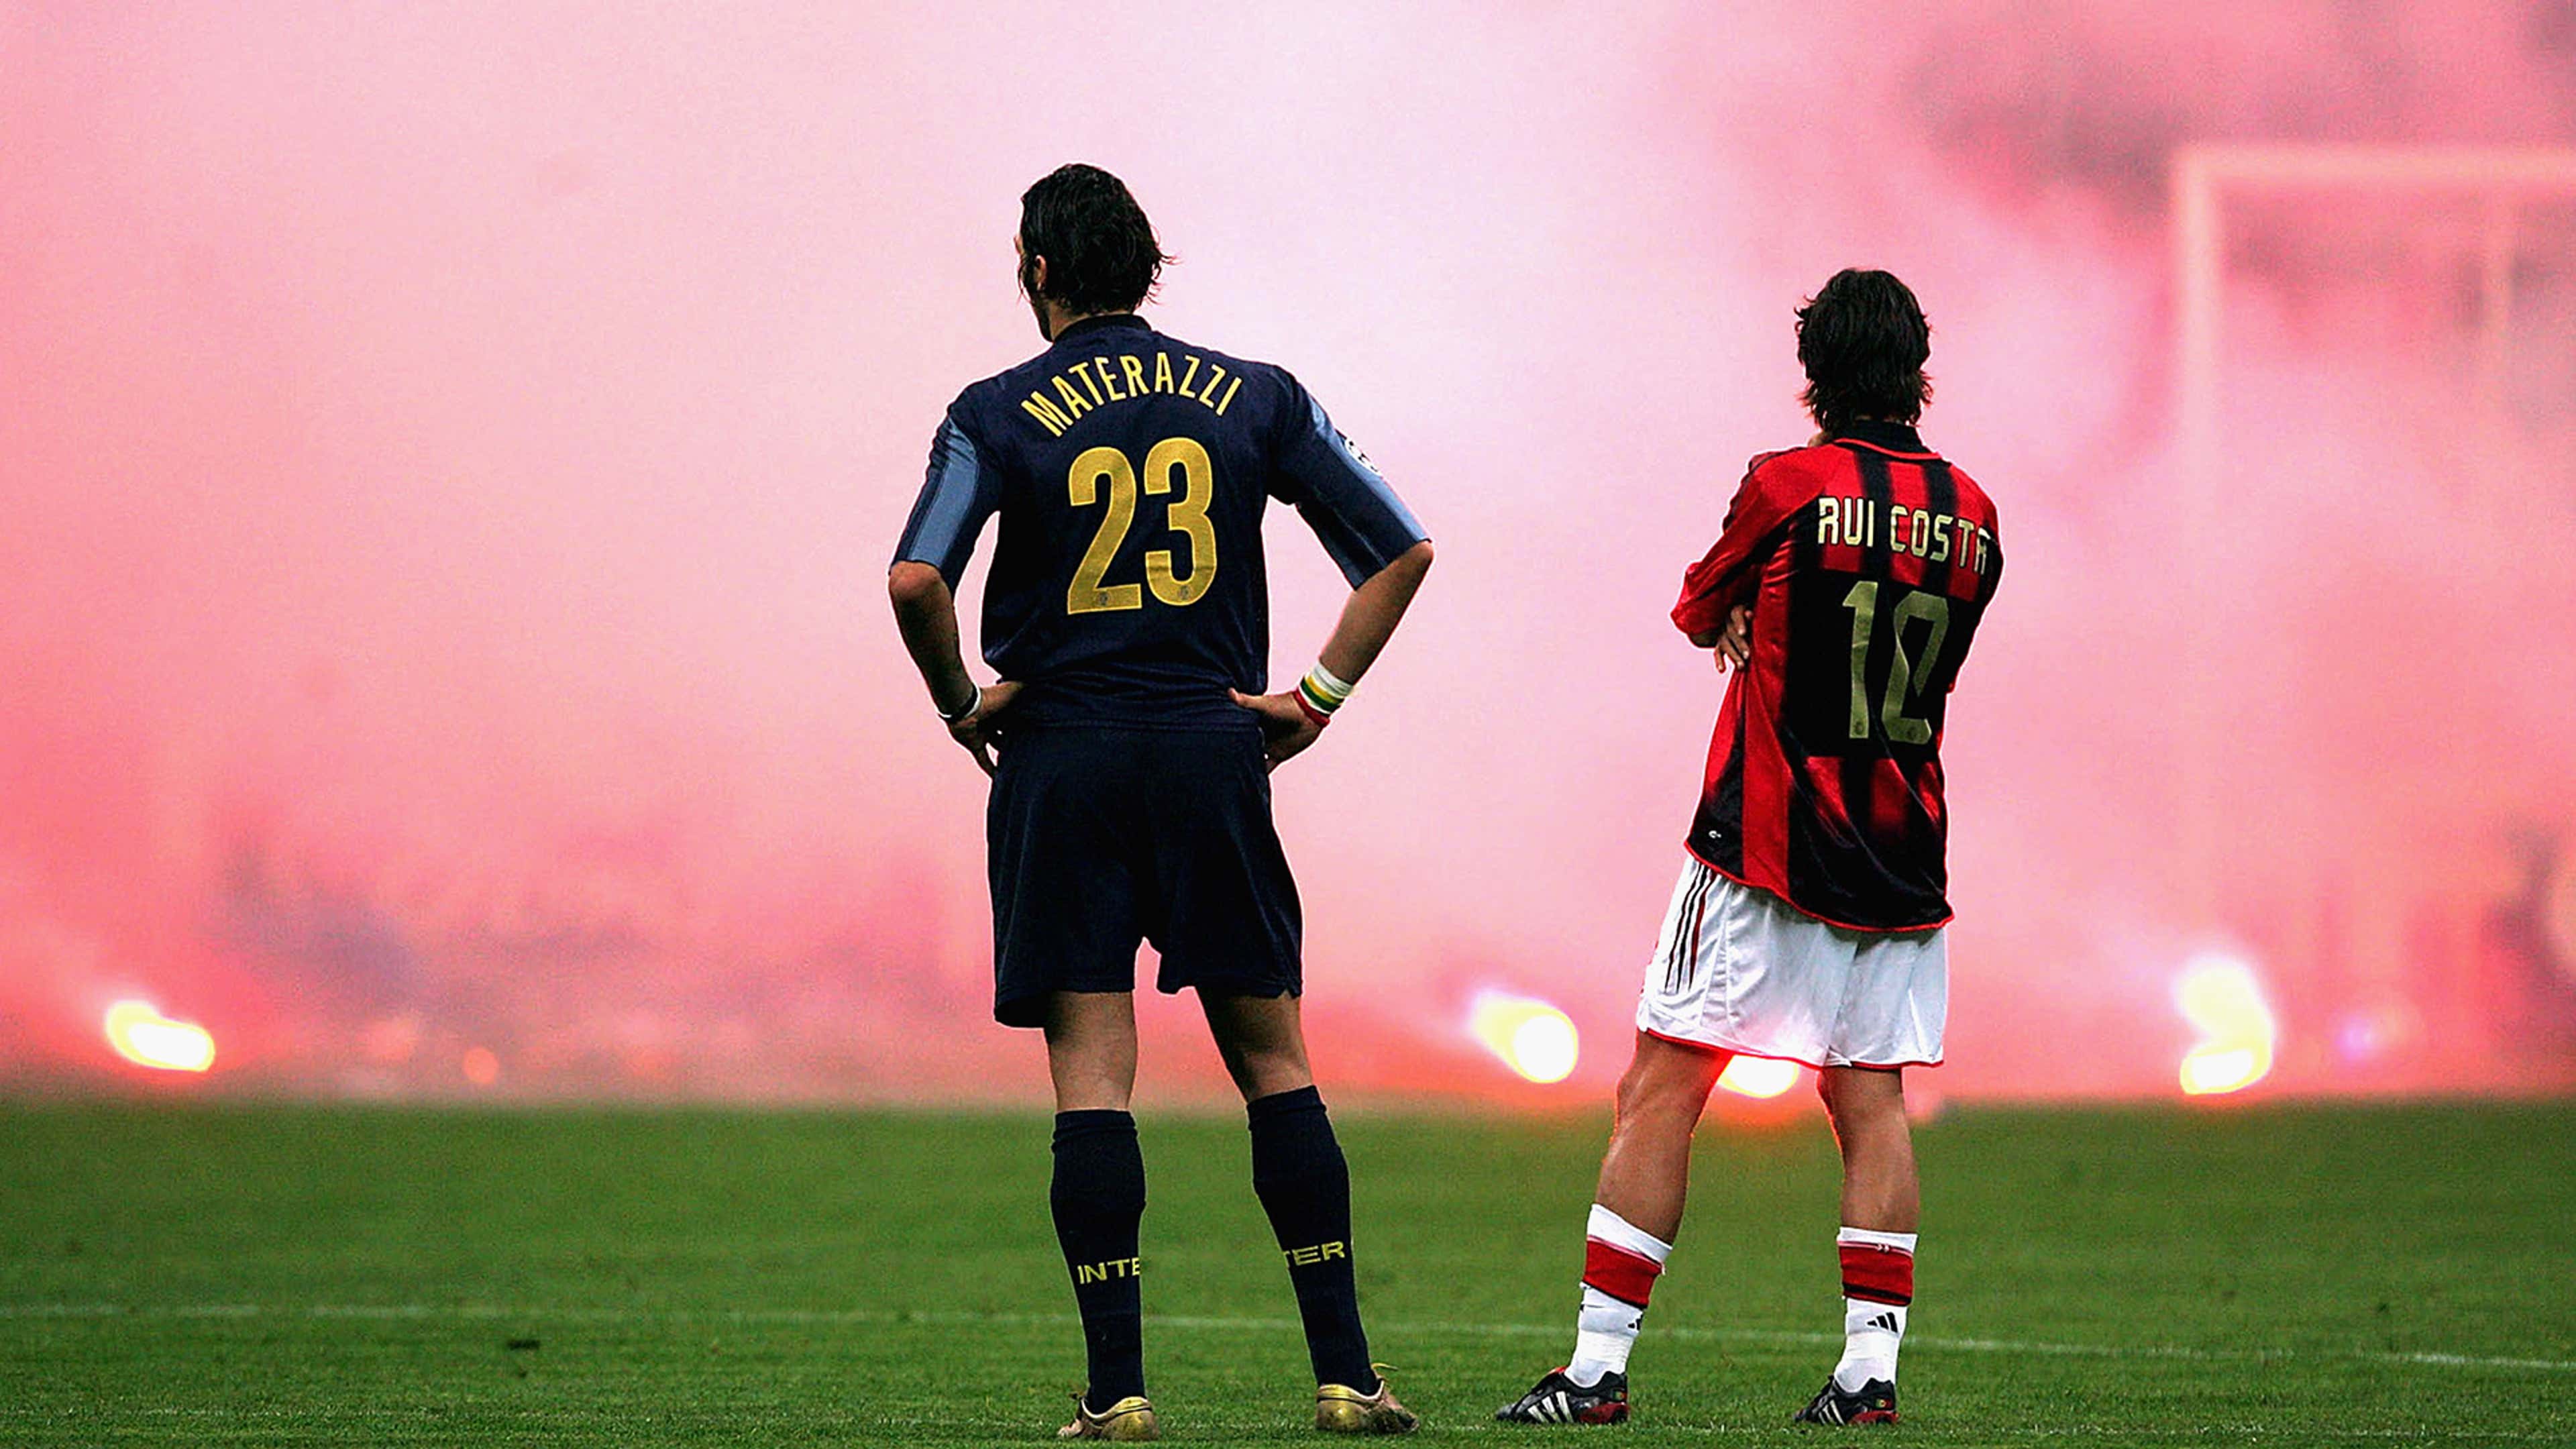 Marco Materazzi Rui Costa Inter AC Milan 2005 Champions League